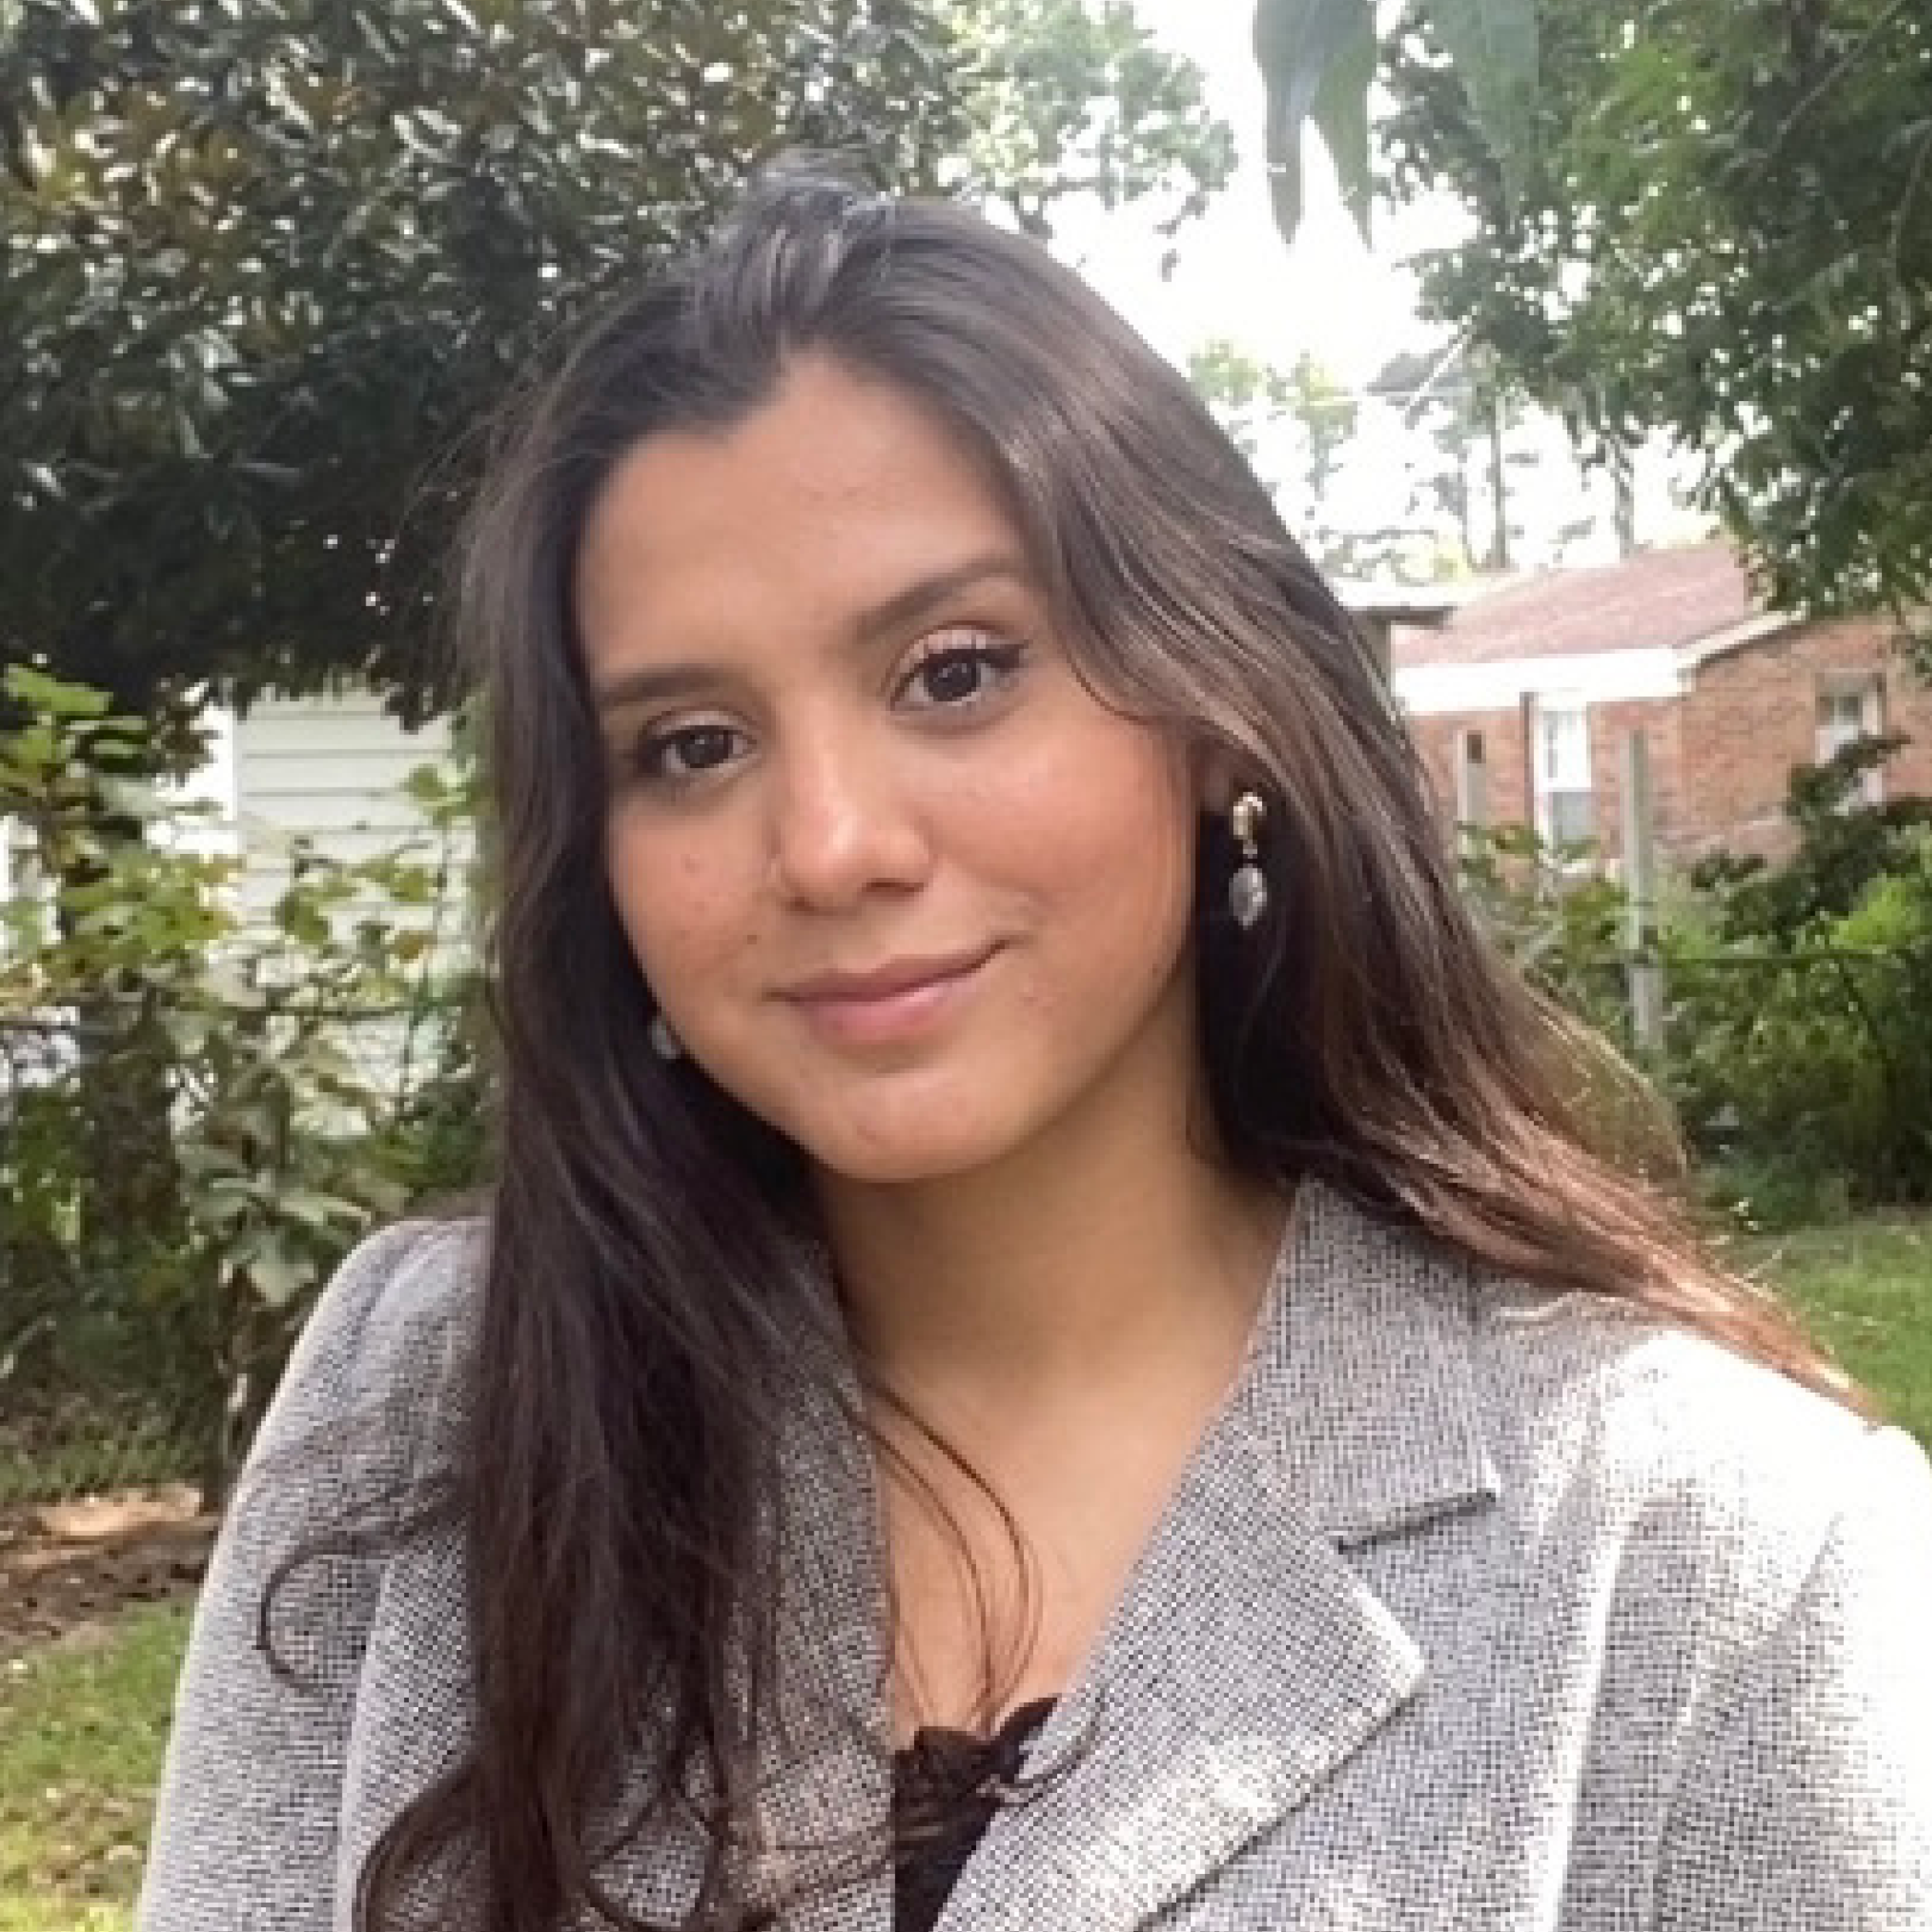 UNC Hussman student Nayeli Jaramillo-Plata ’24